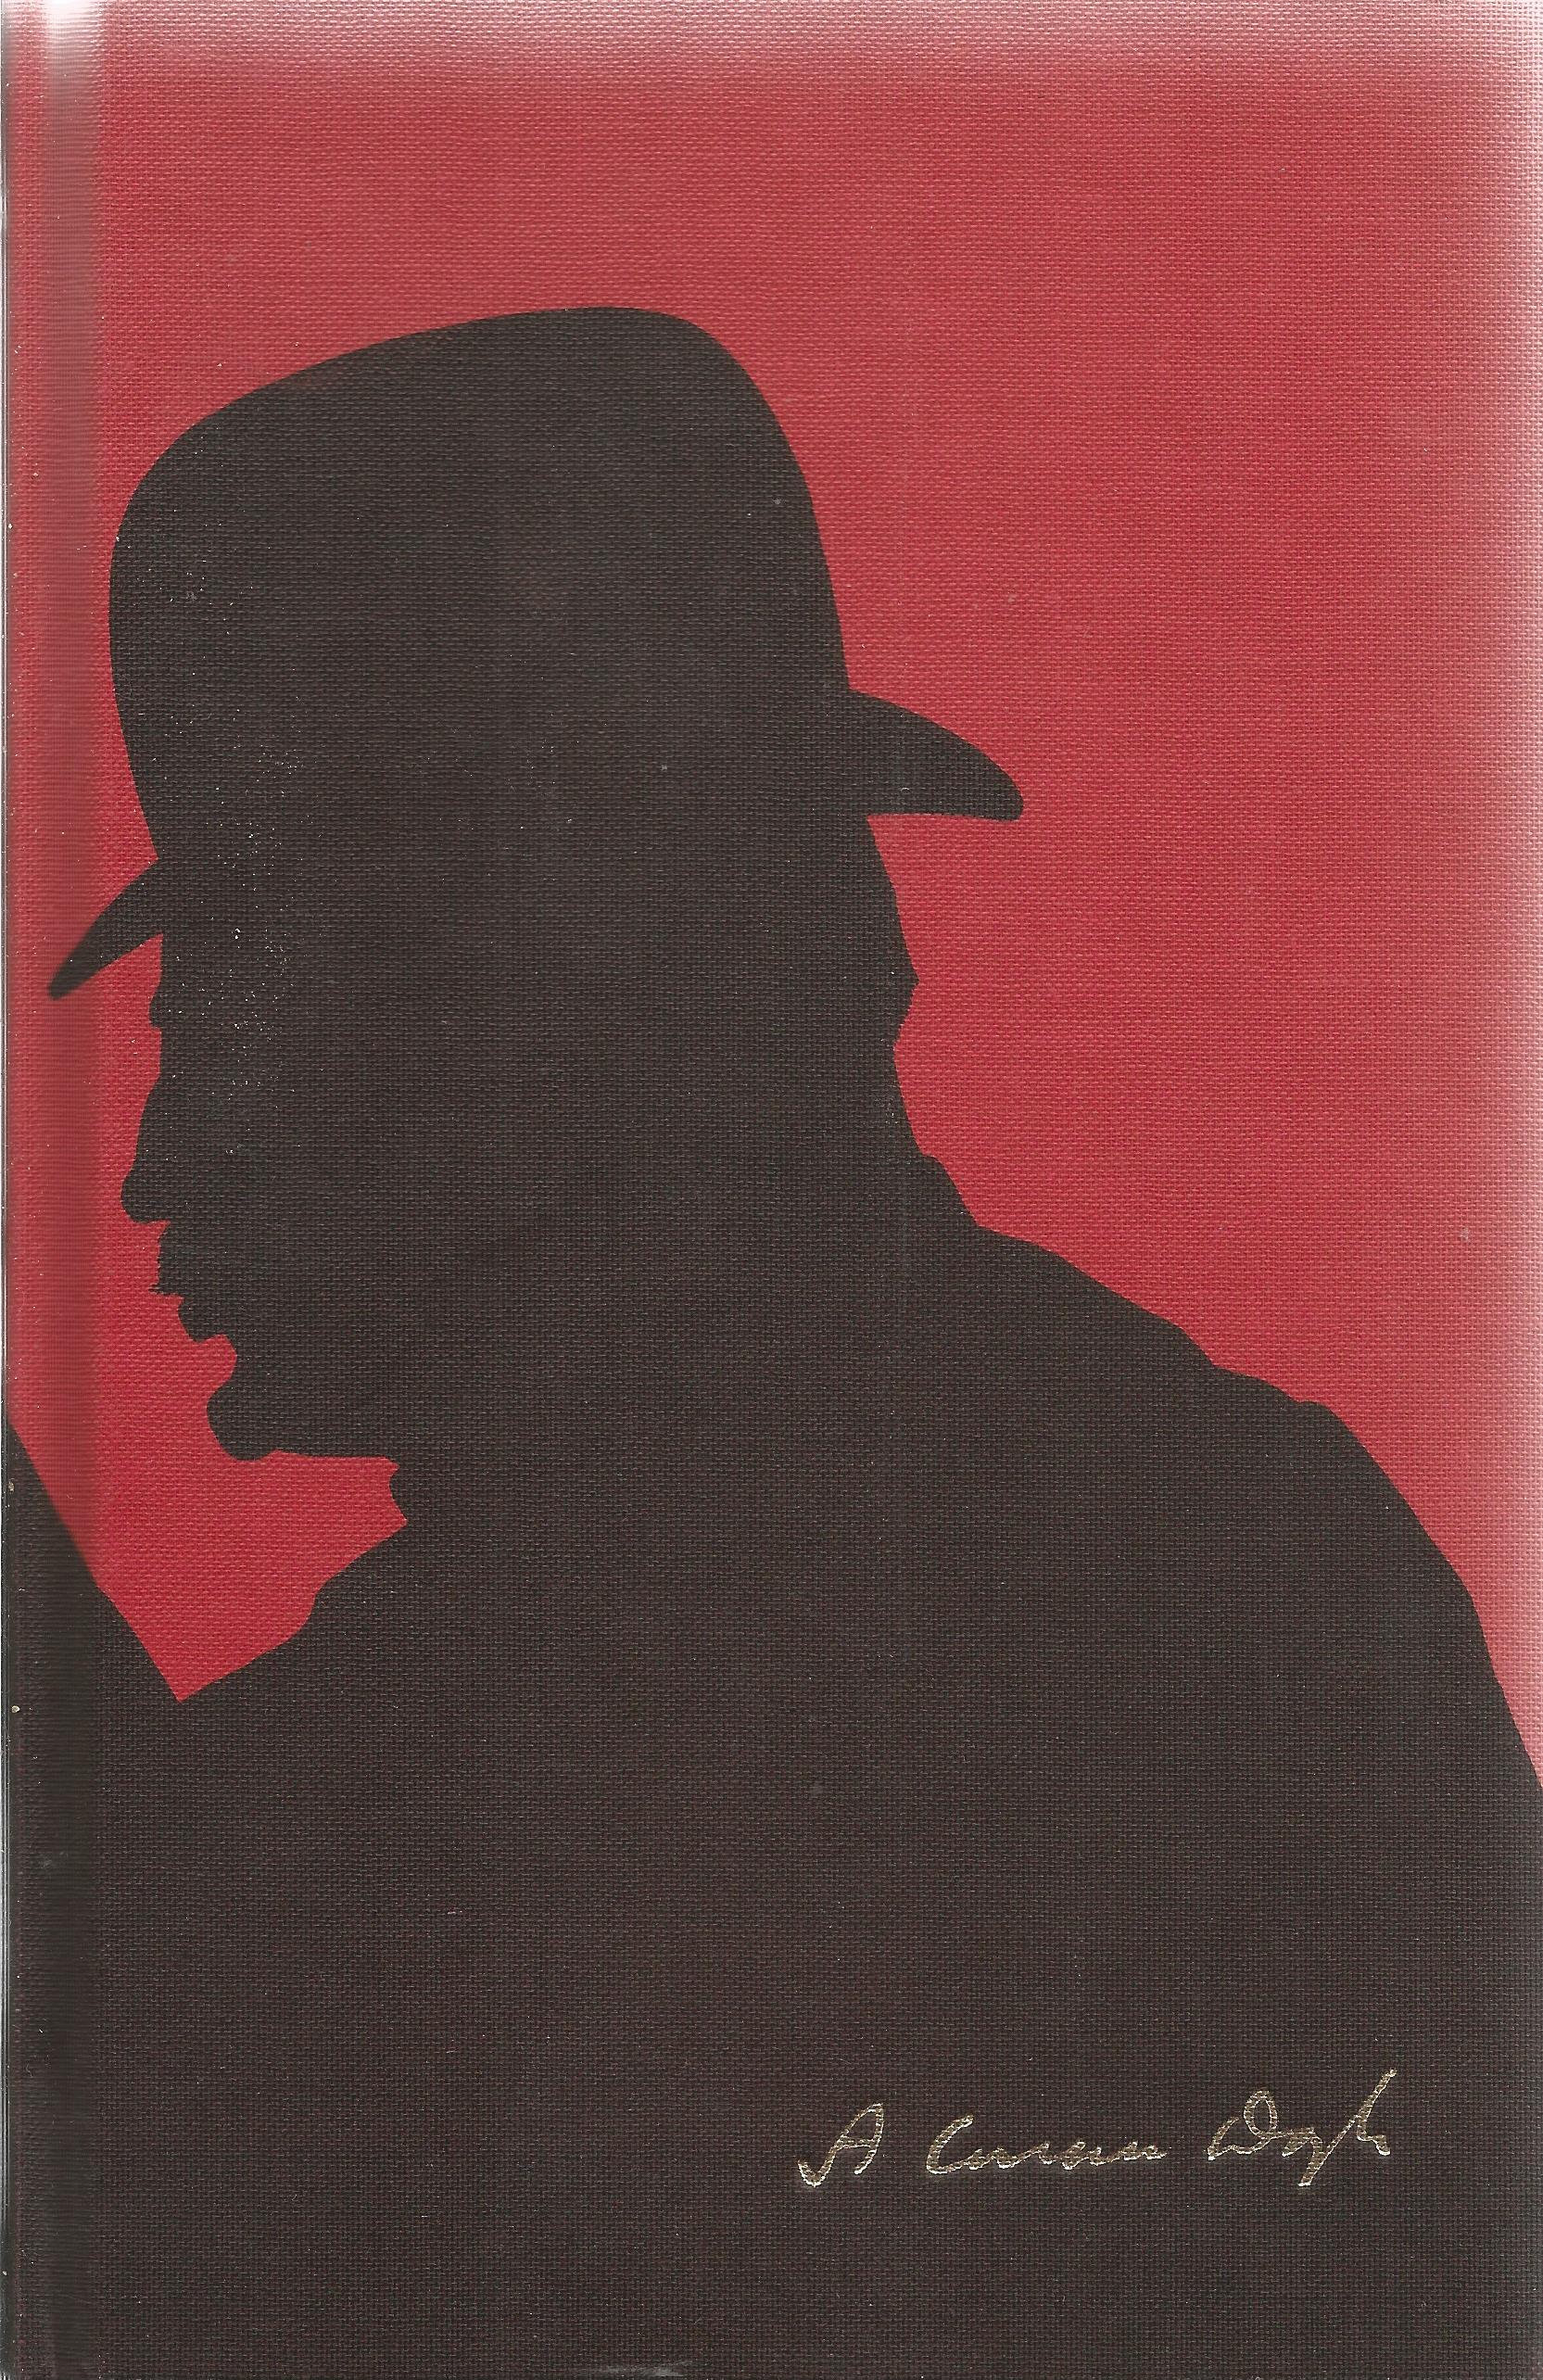 Folio society hardback book The Case-Book of Sherlock Holmes by Arthur Conan Doyle 1993 in good